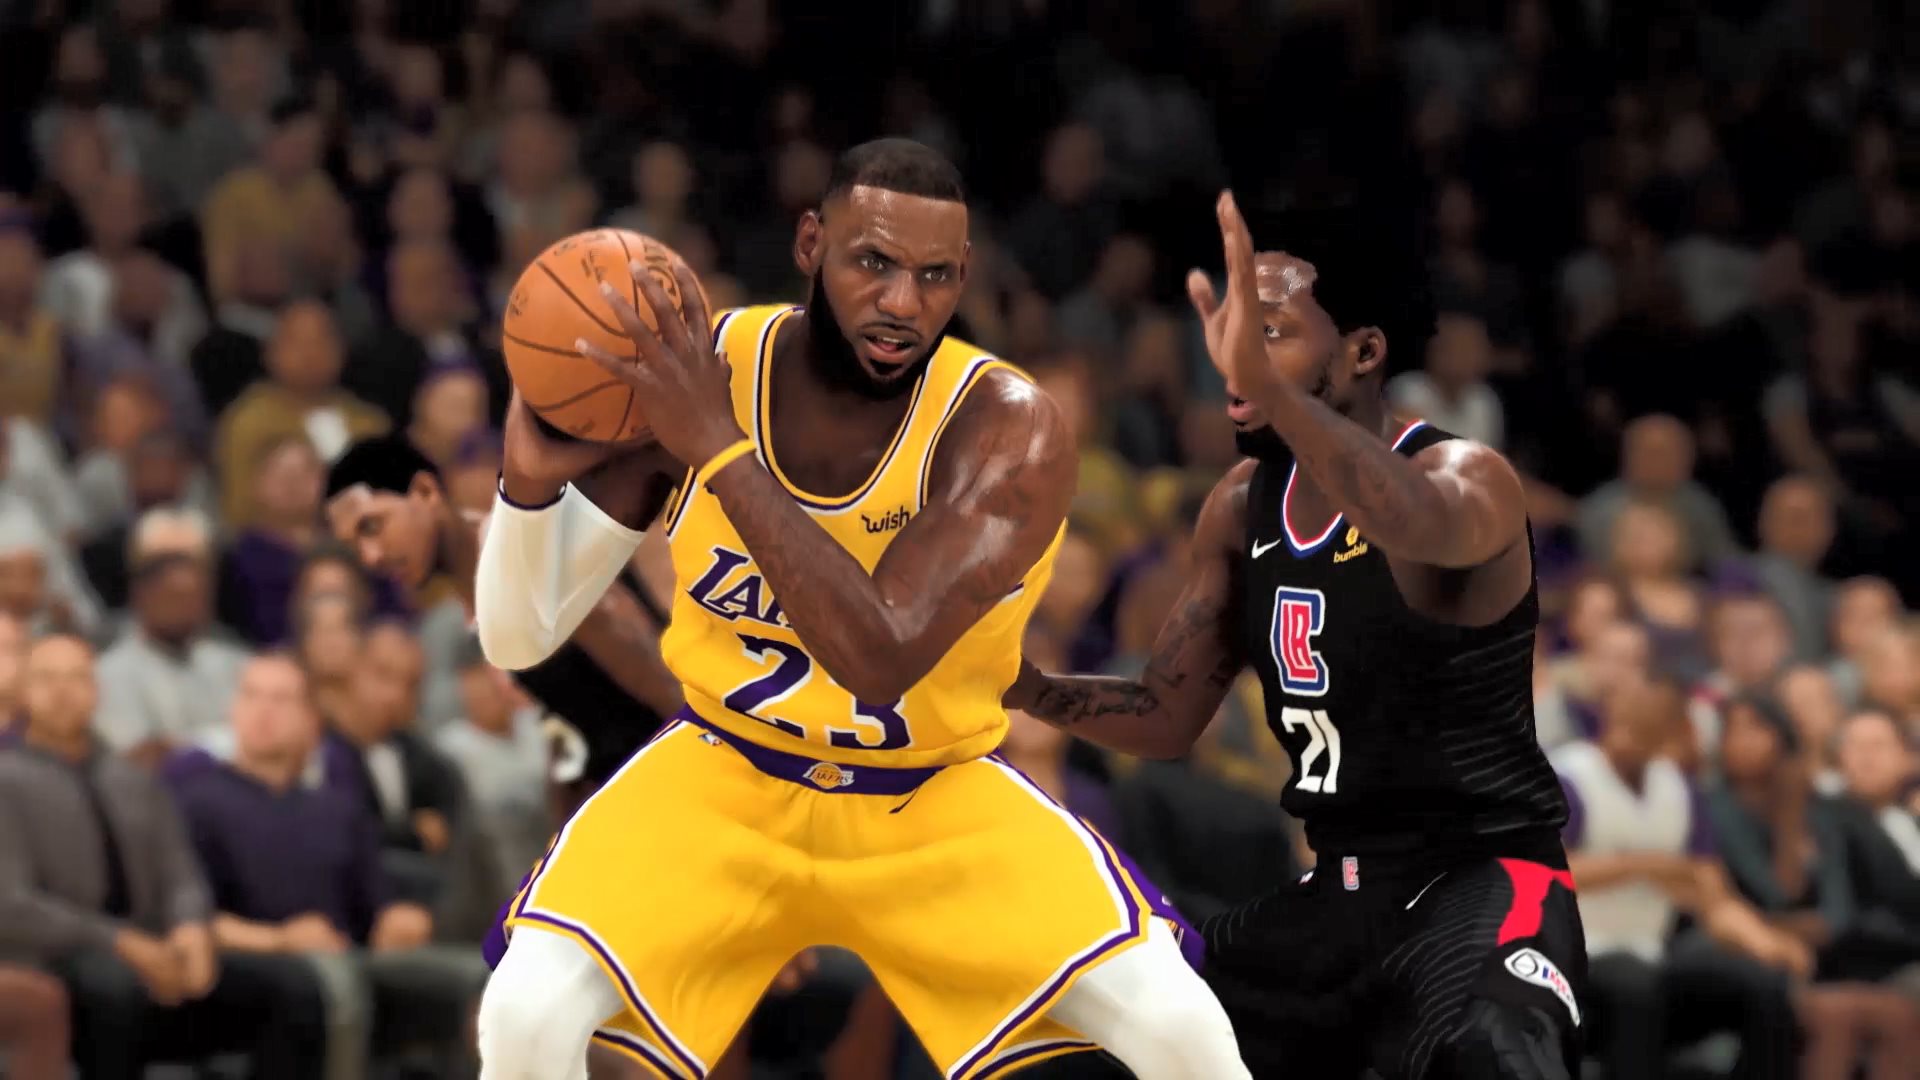 《NBA 2K21》新預告釋出 大量遊戲實機影像公開